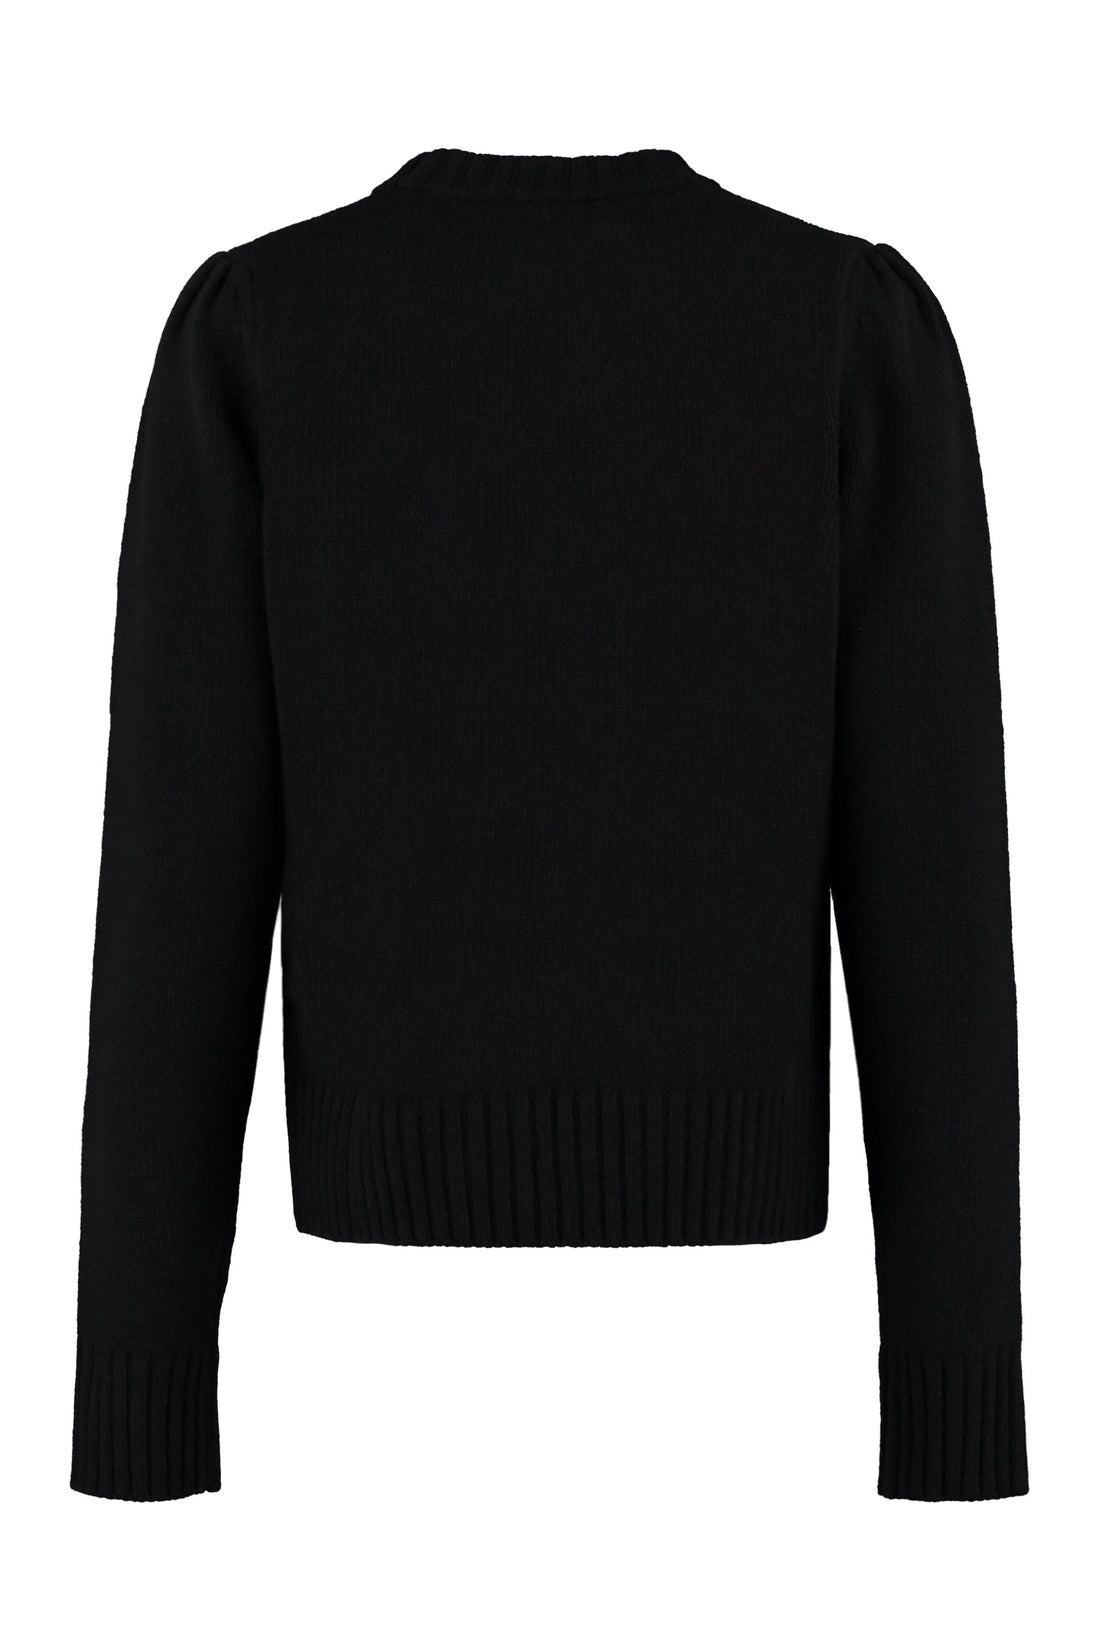 GANNI-OUTLET-SALE-Intarsia crew-neck sweater-ARCHIVIST